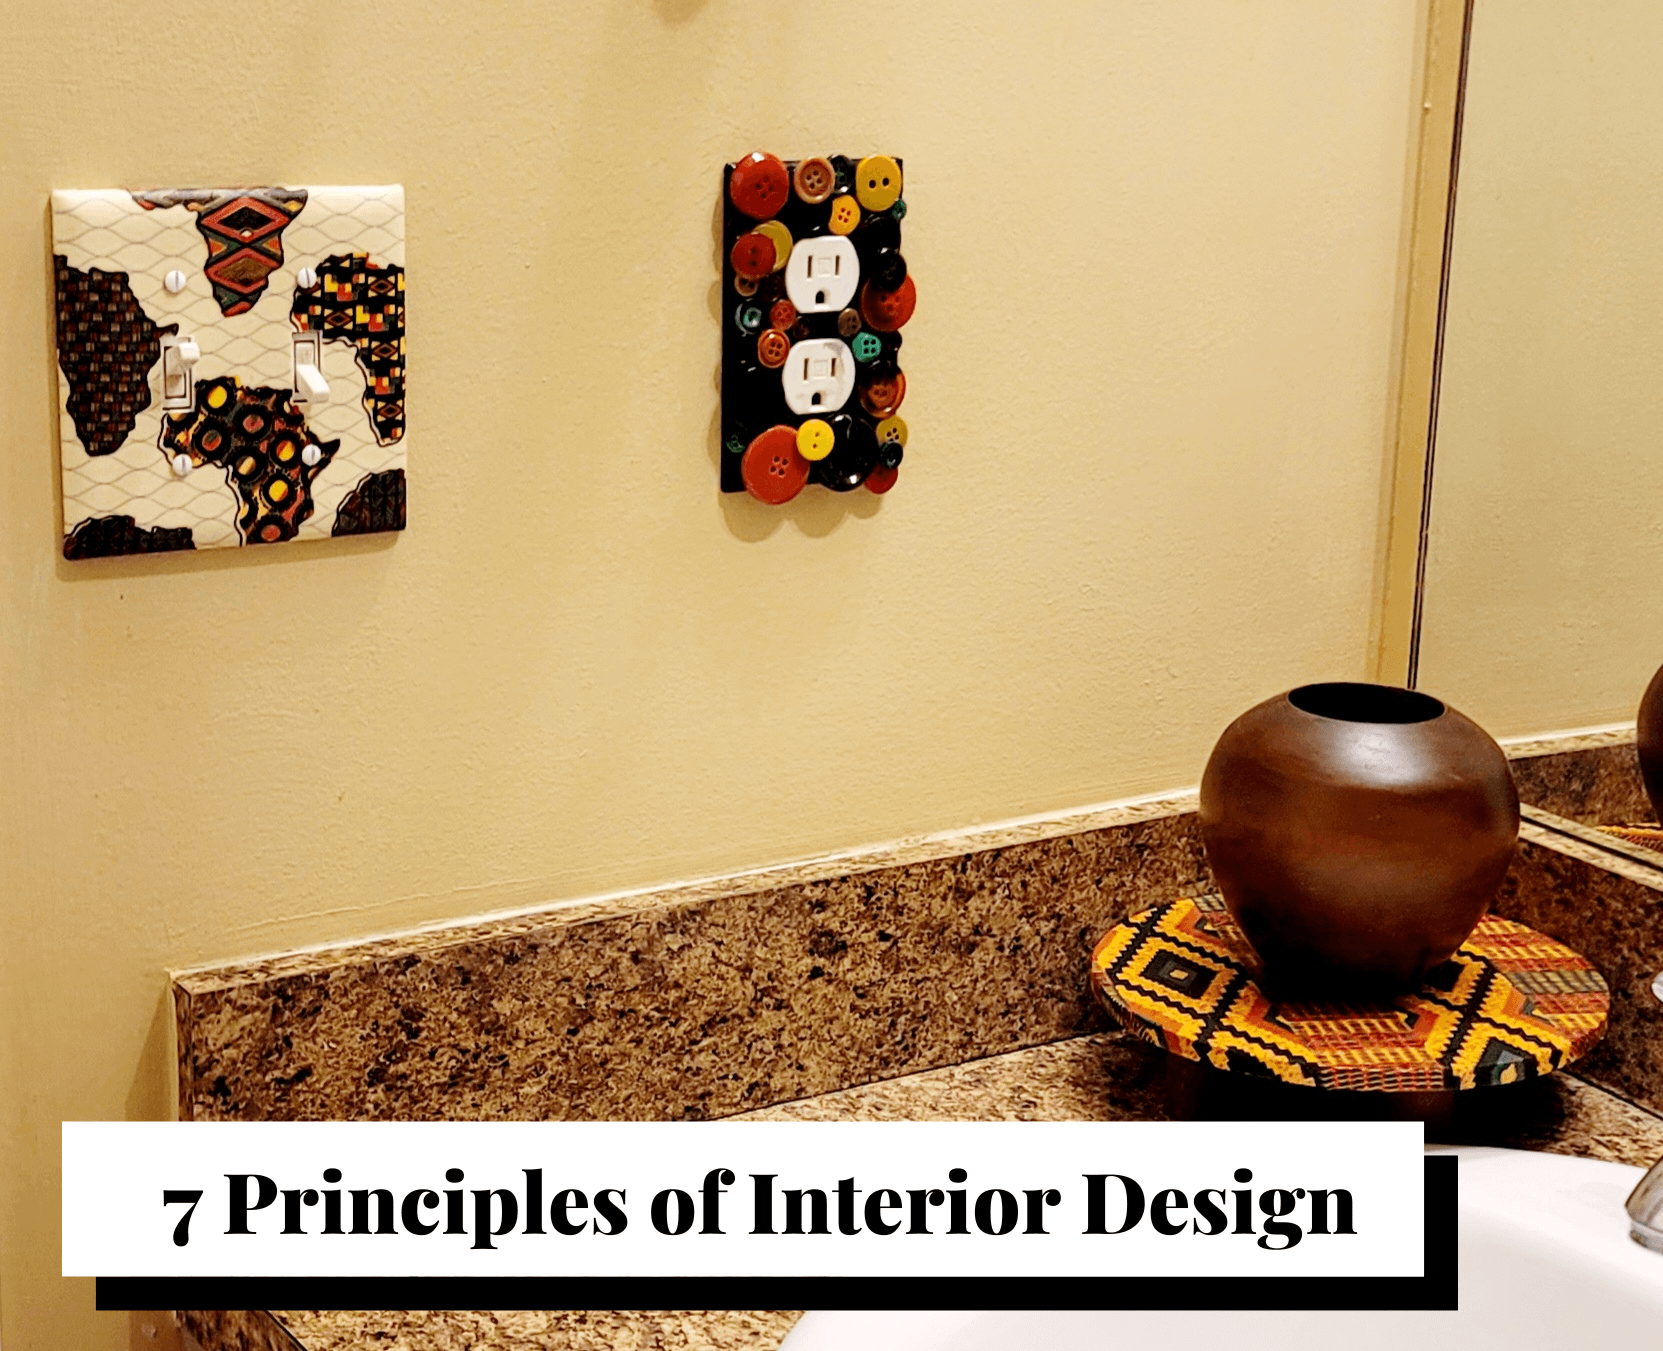 7 principles of interior design - Kustom Kreationz by Kila